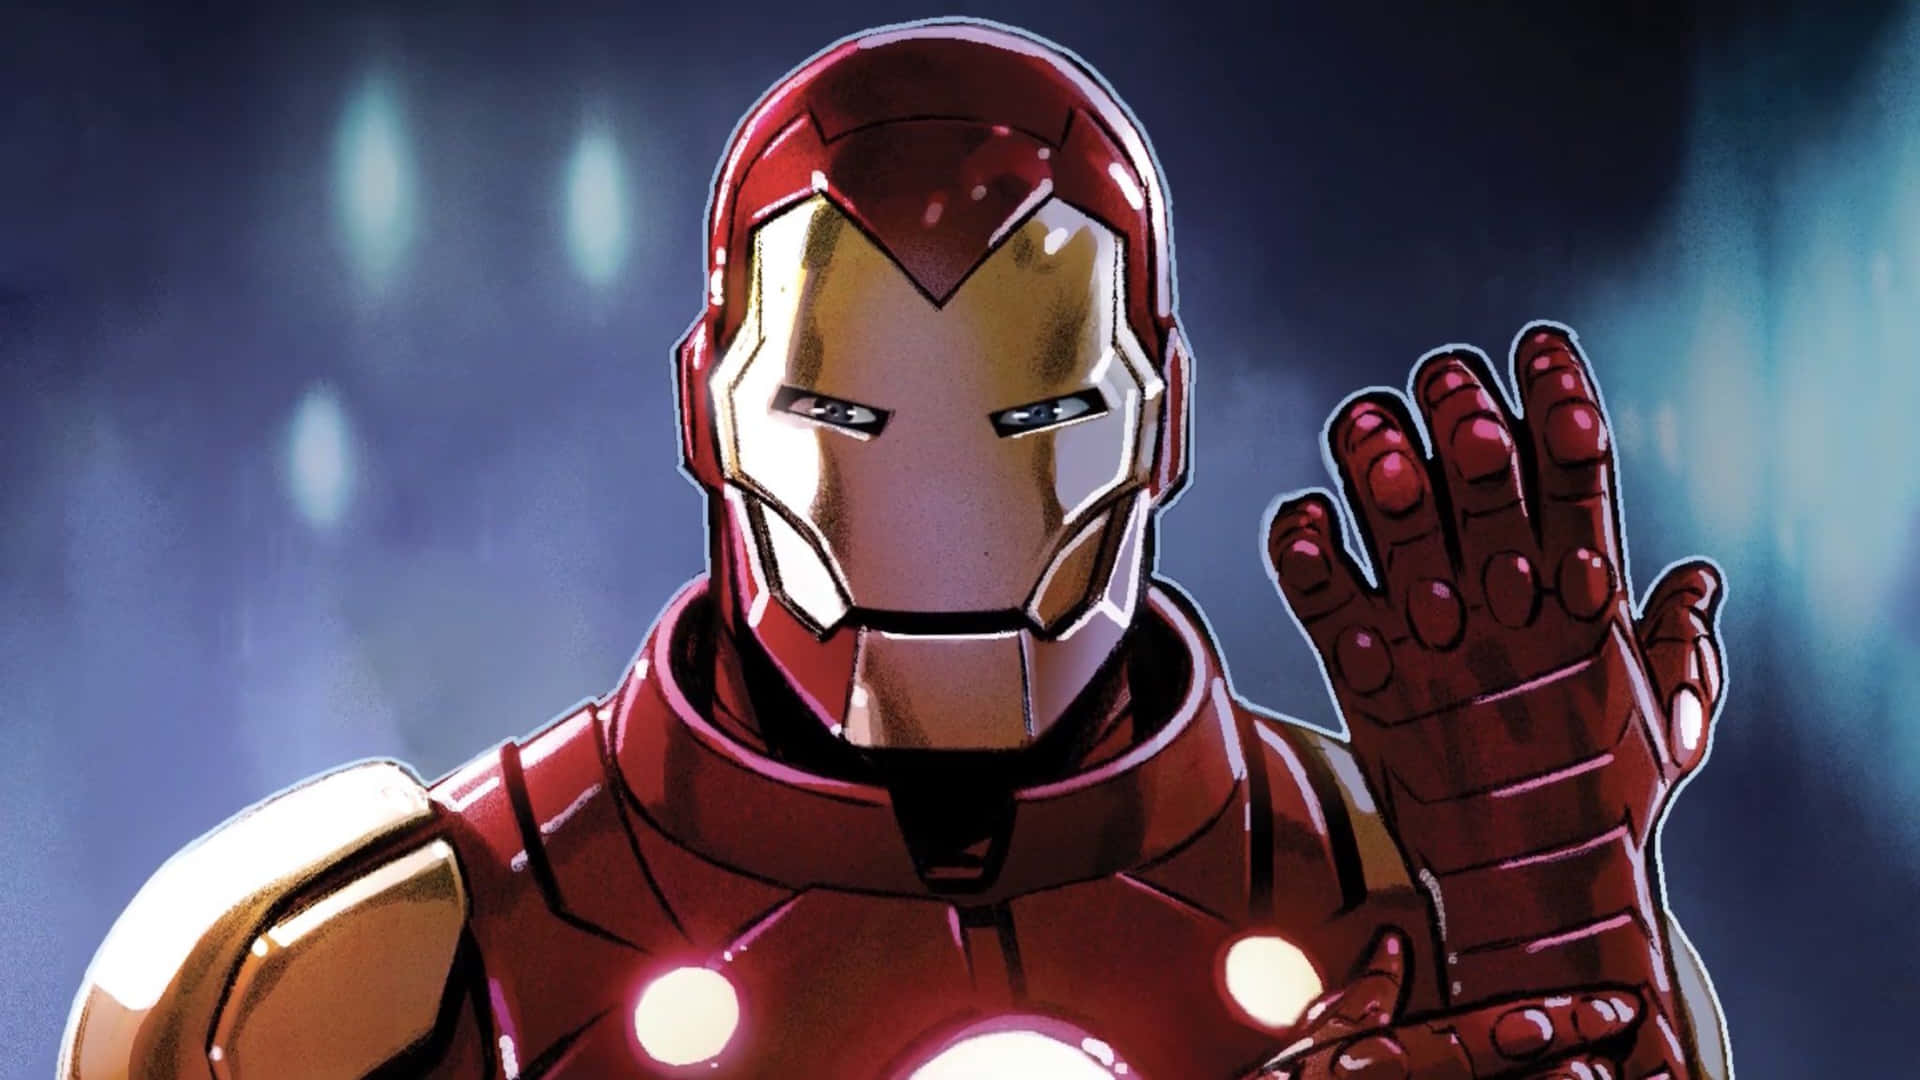 Classic Iron Man From Marvel Comics Wallpaper